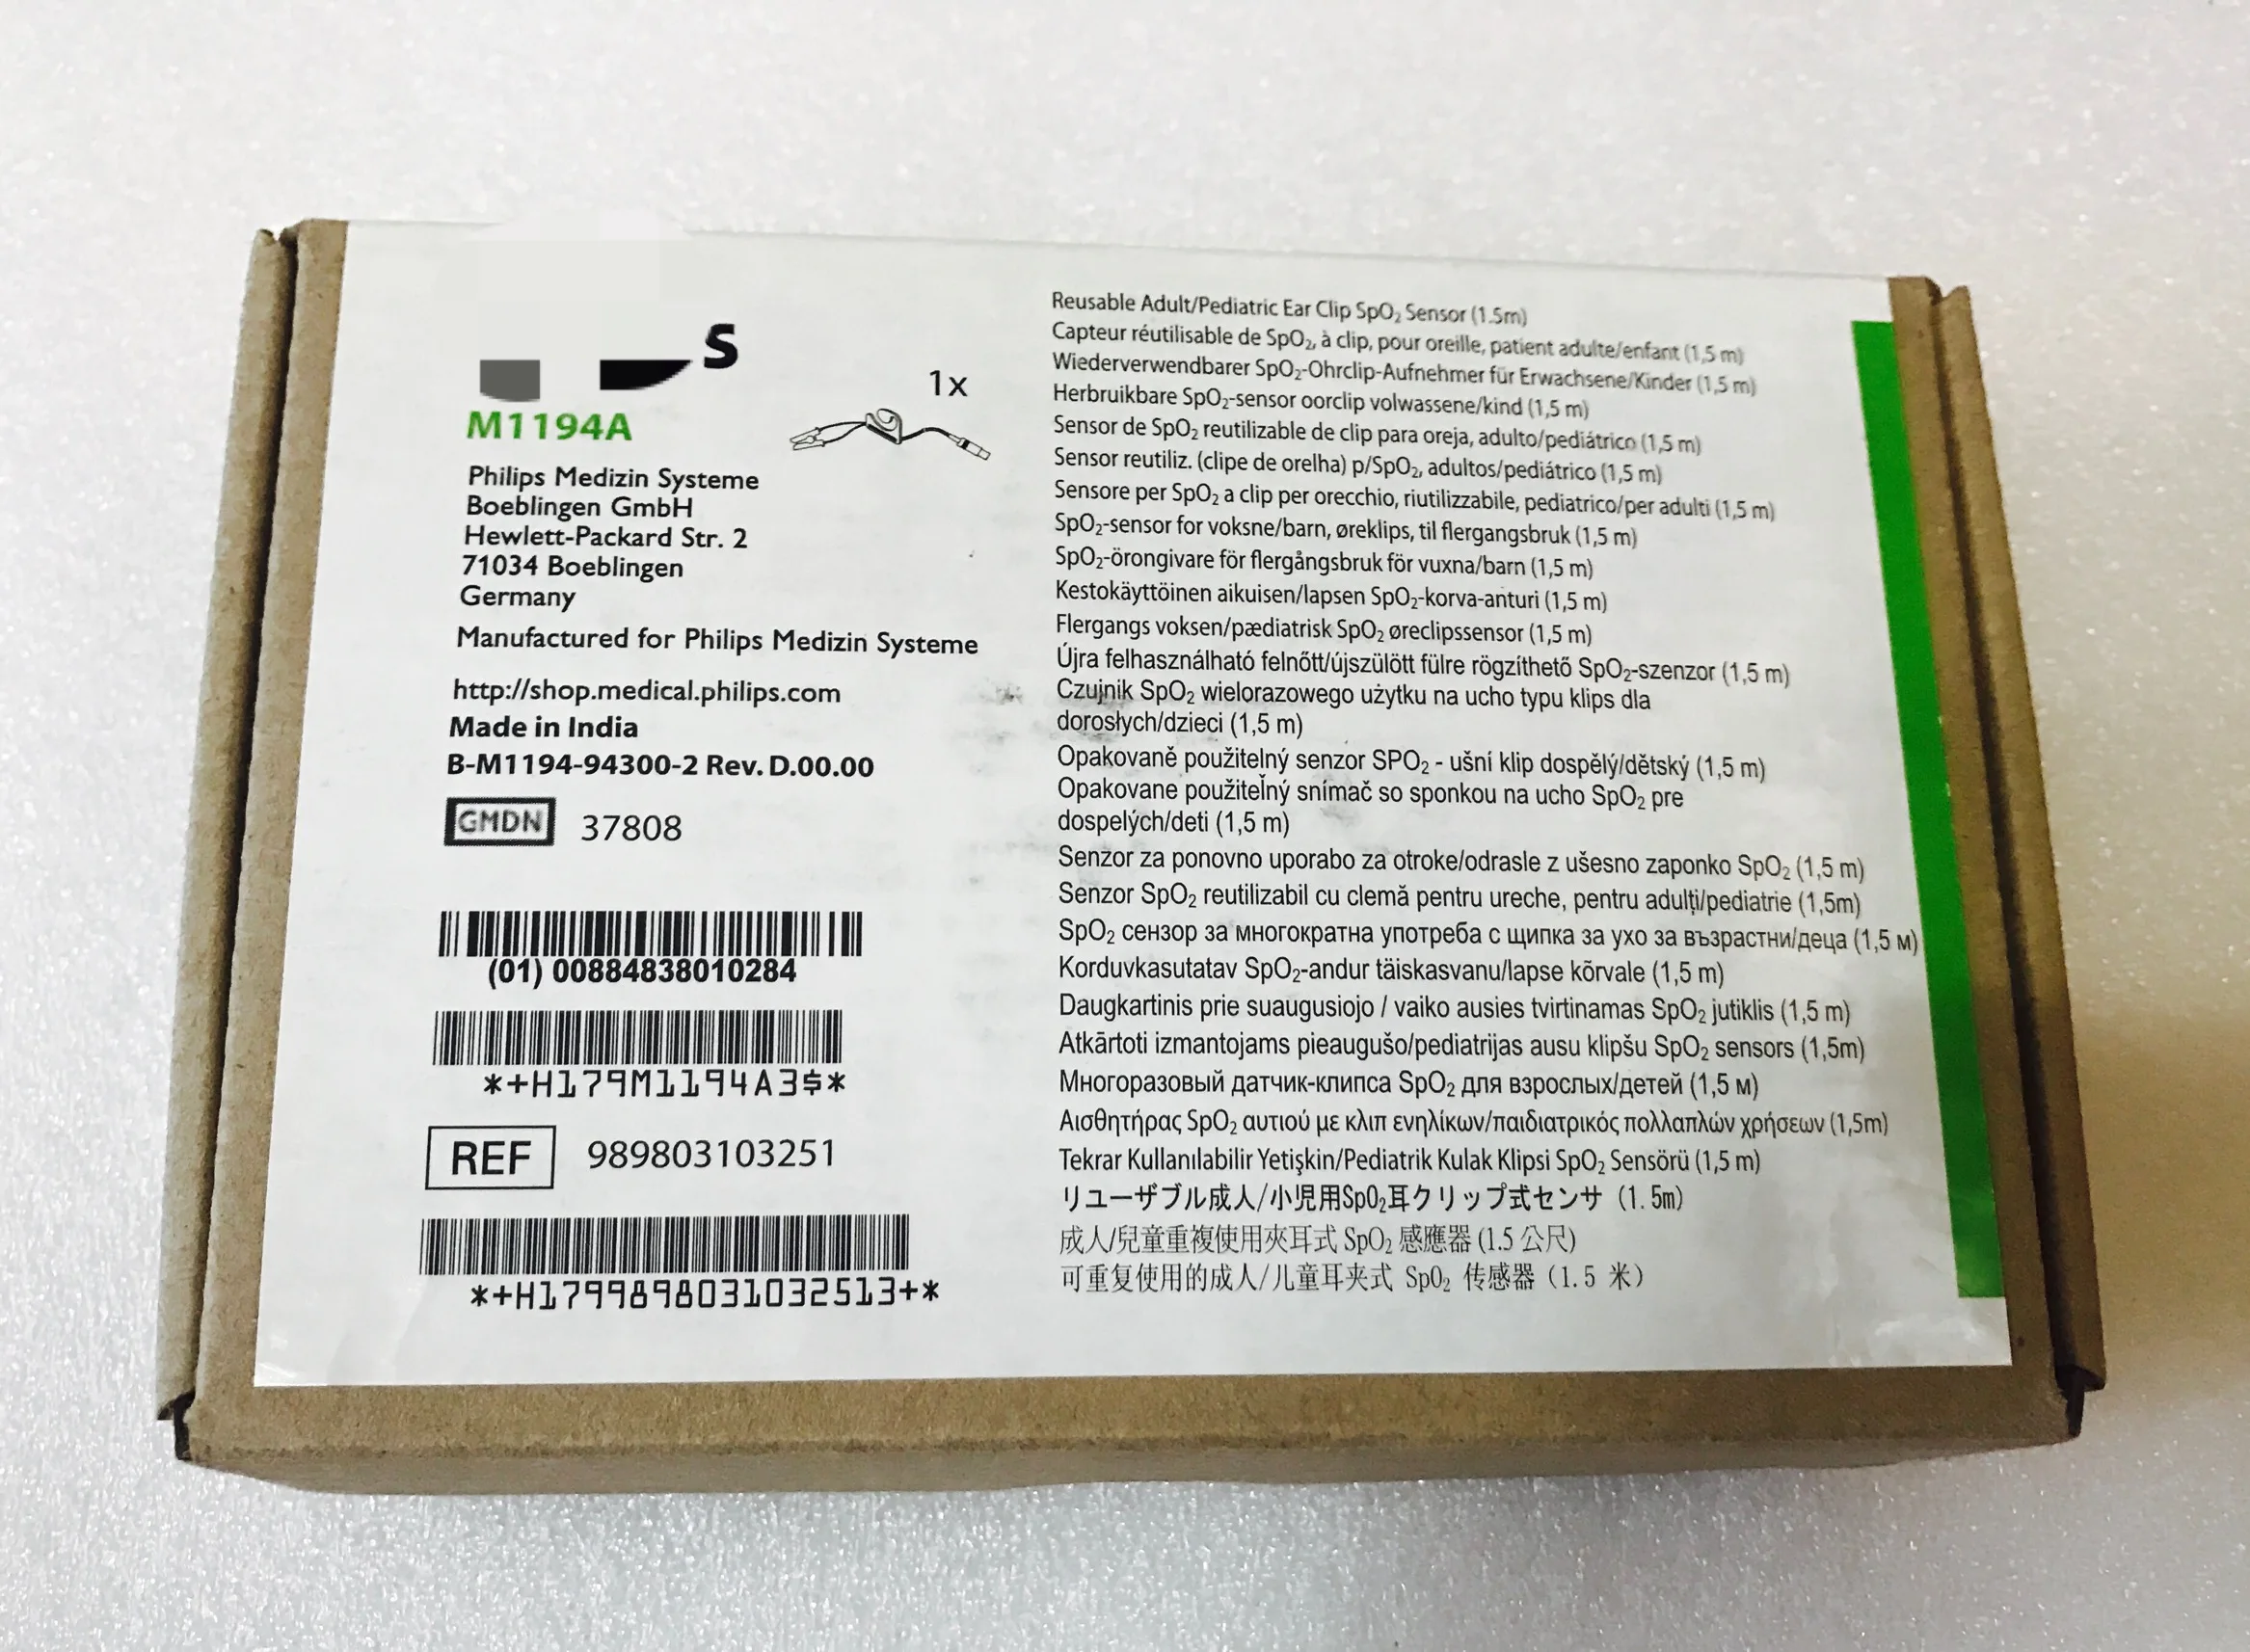 M1194A medizin System Boeblingen™ hewlett-packard str.271034 nuevo original